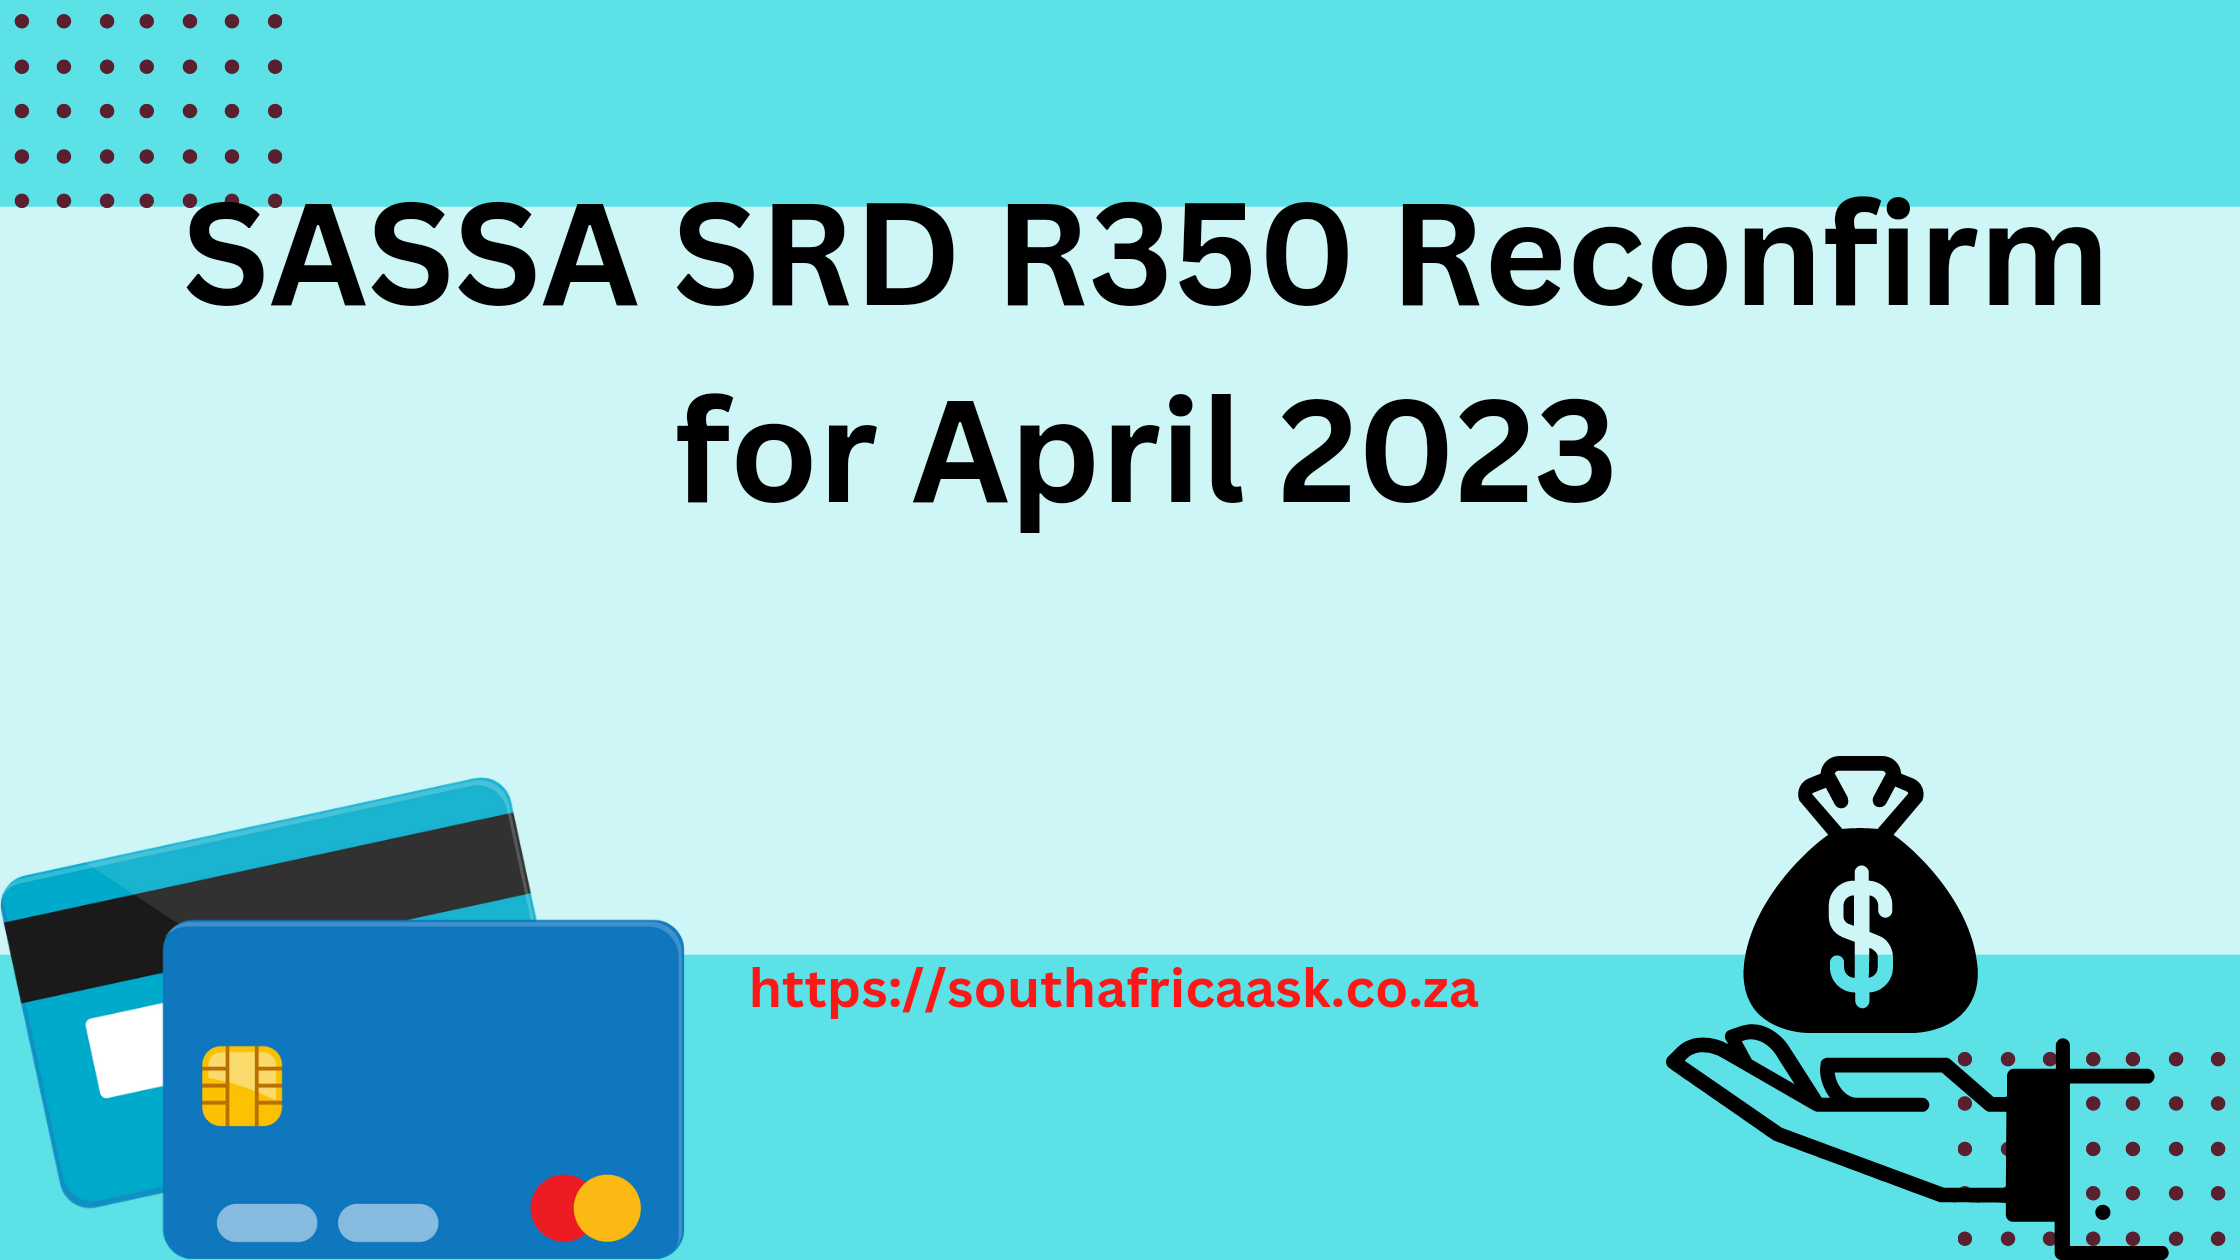 SASSA SRD R350 Reconfirm for April 2023